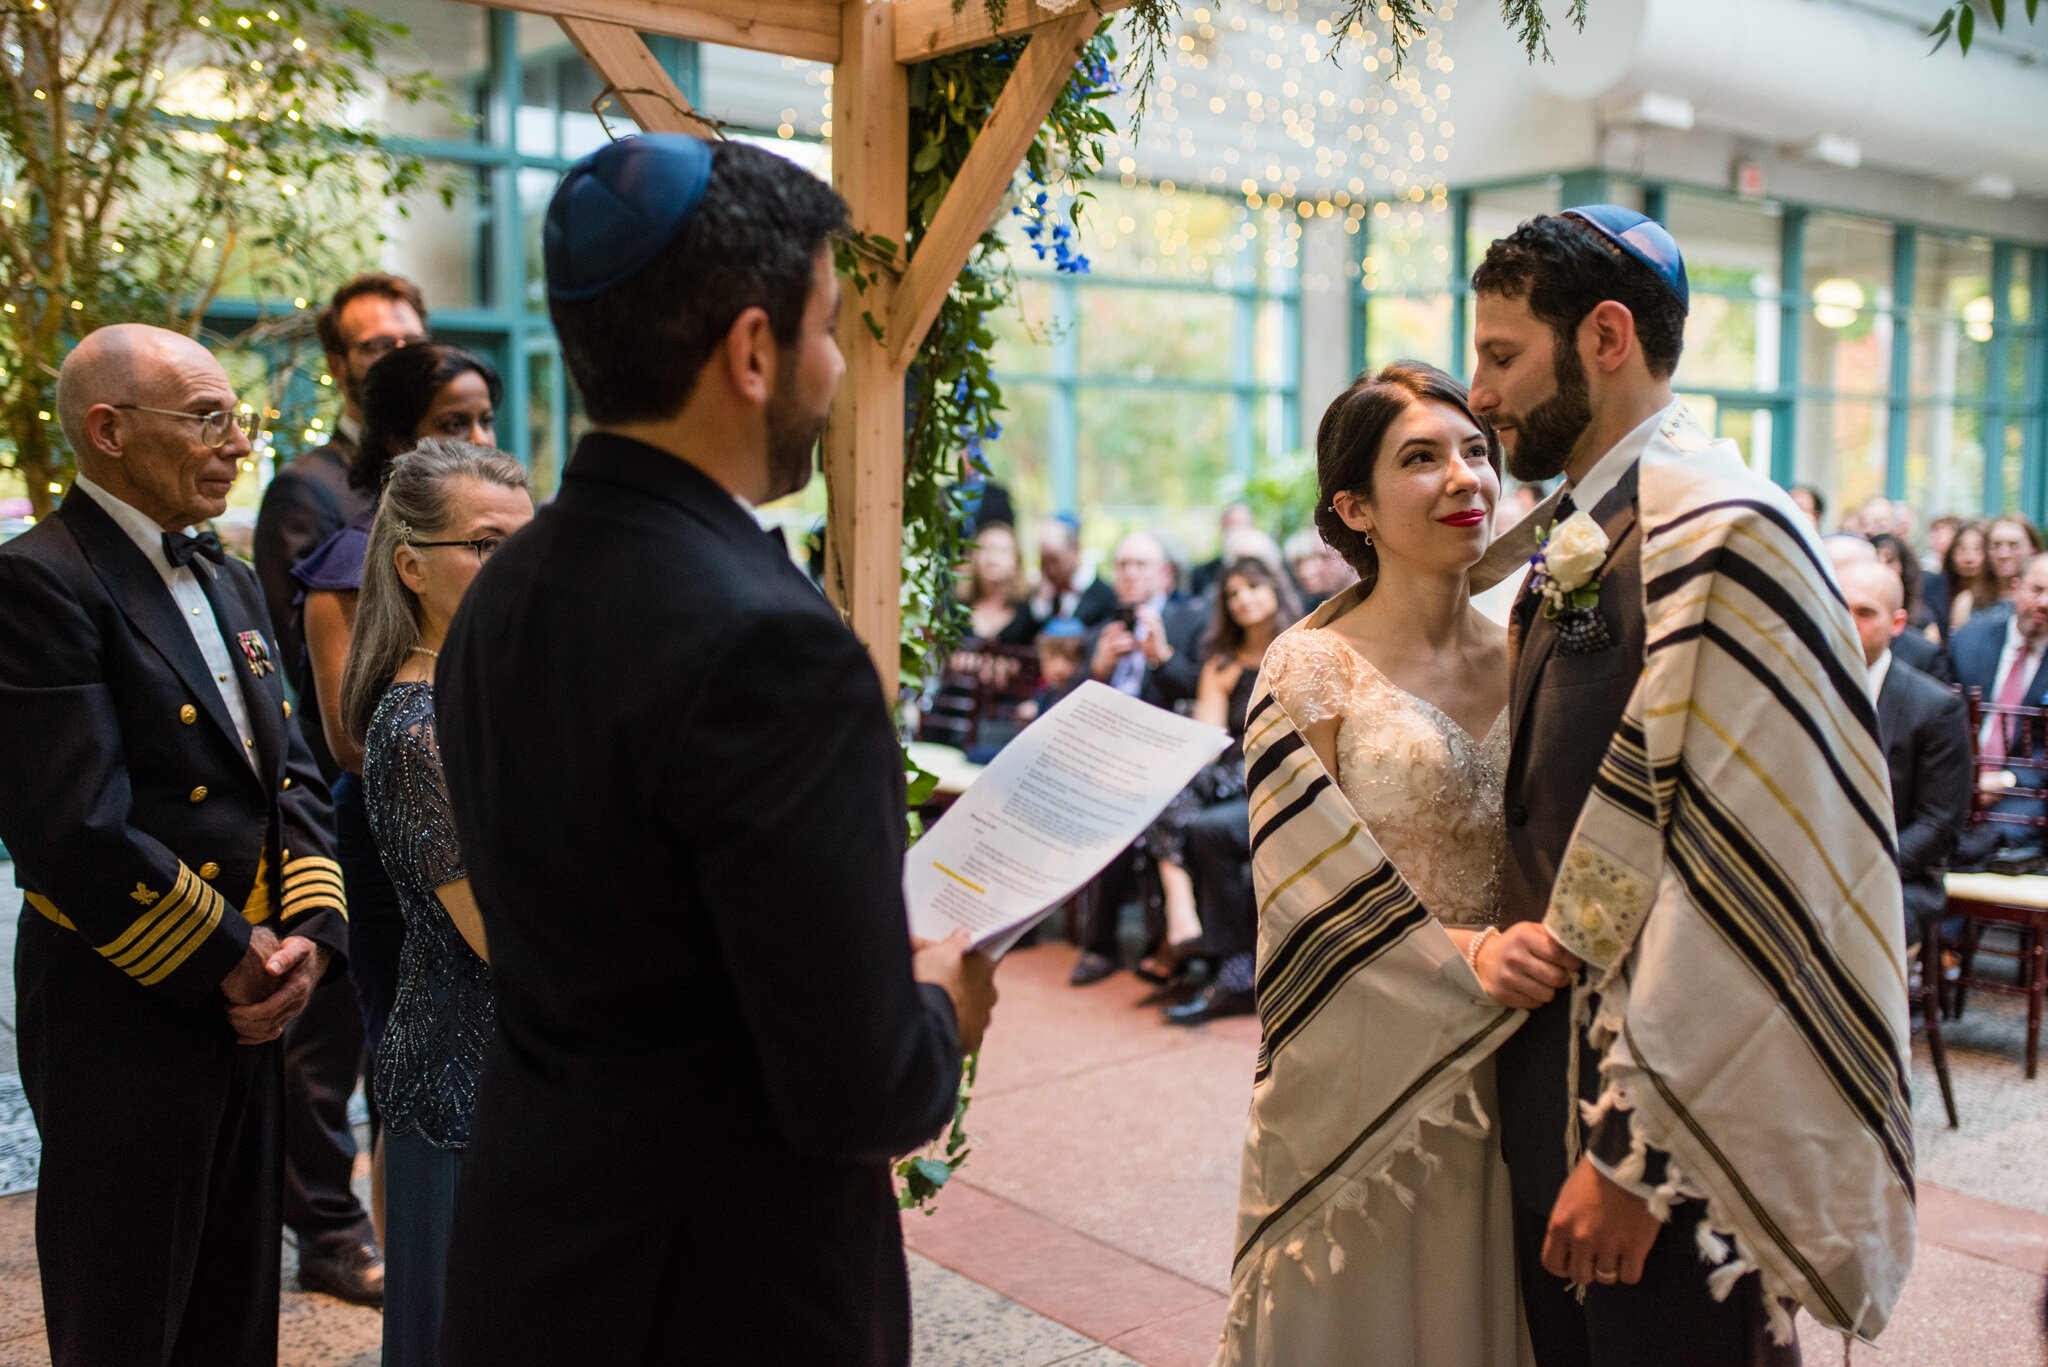 Jewish wedding ceremony at Meadowlark Gardens in Vienna Virginia